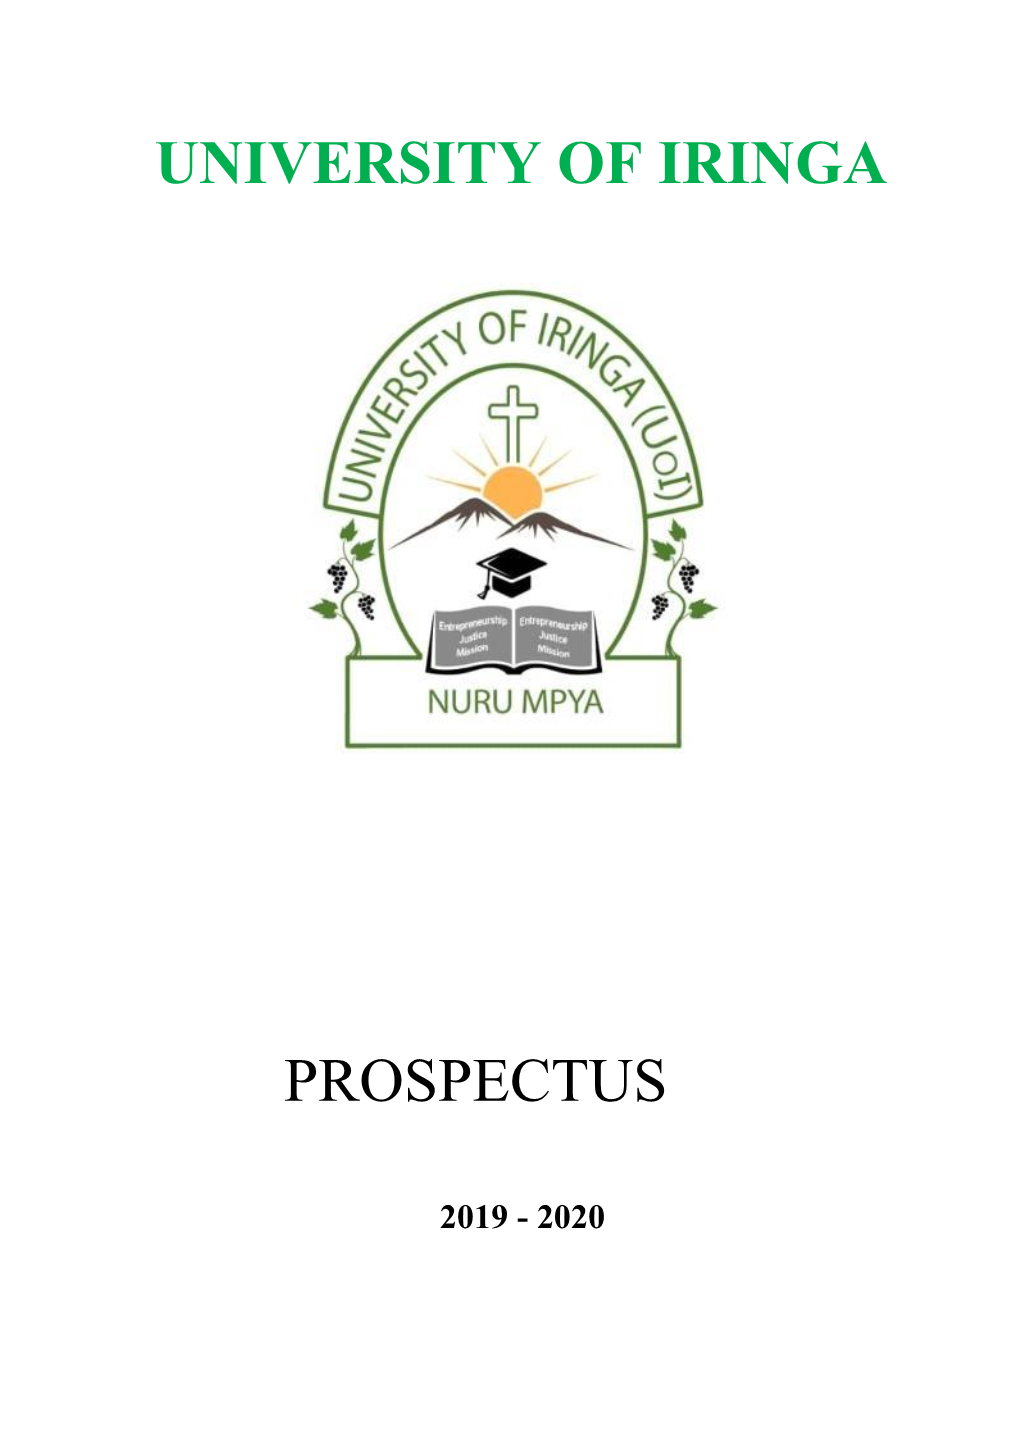 Prospectus for 2019-2020